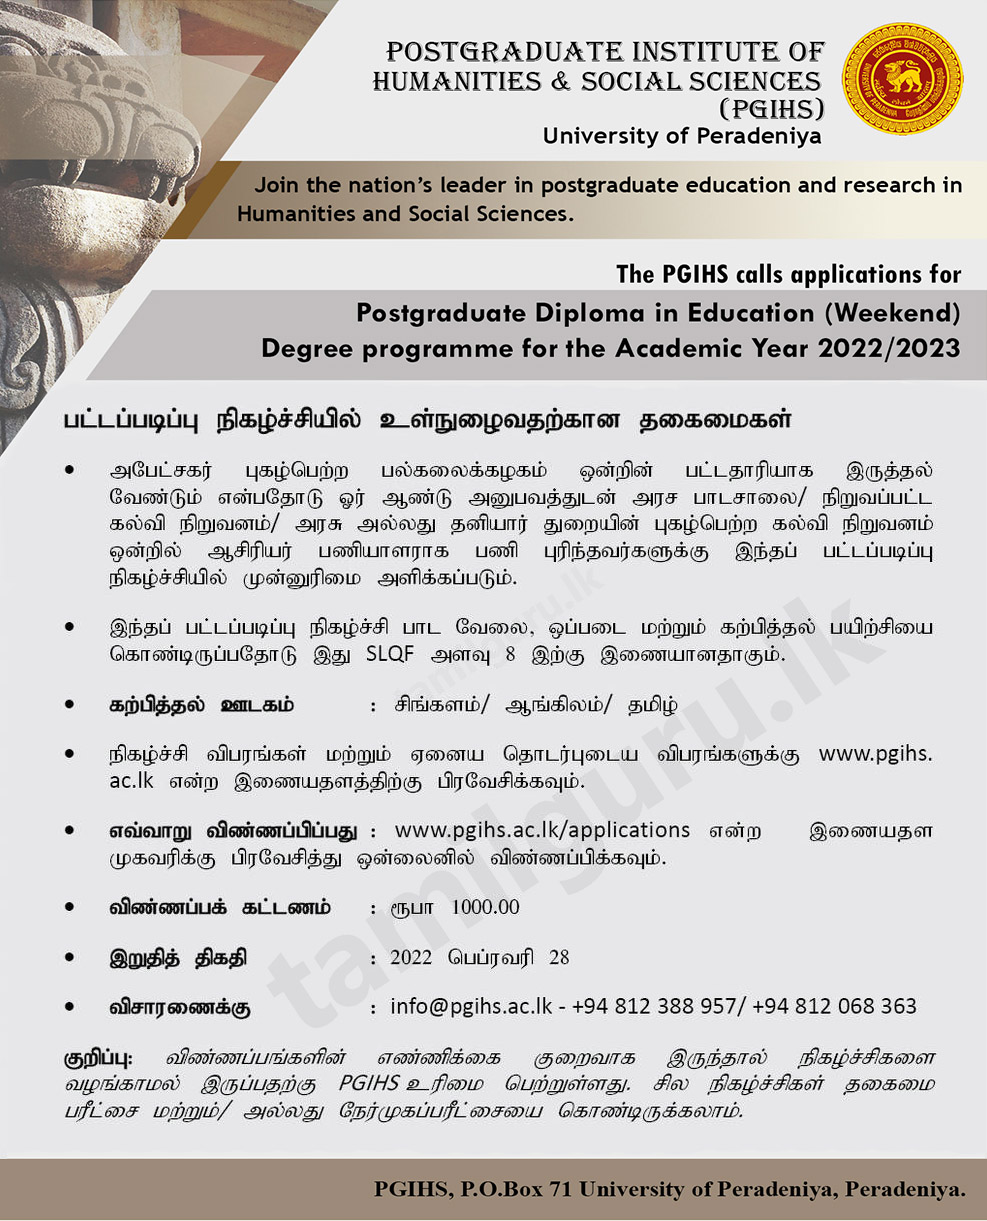 Postgraduate Diploma in Education (Weekend) Degree Programme 2022/2023 - University of Peradeniya